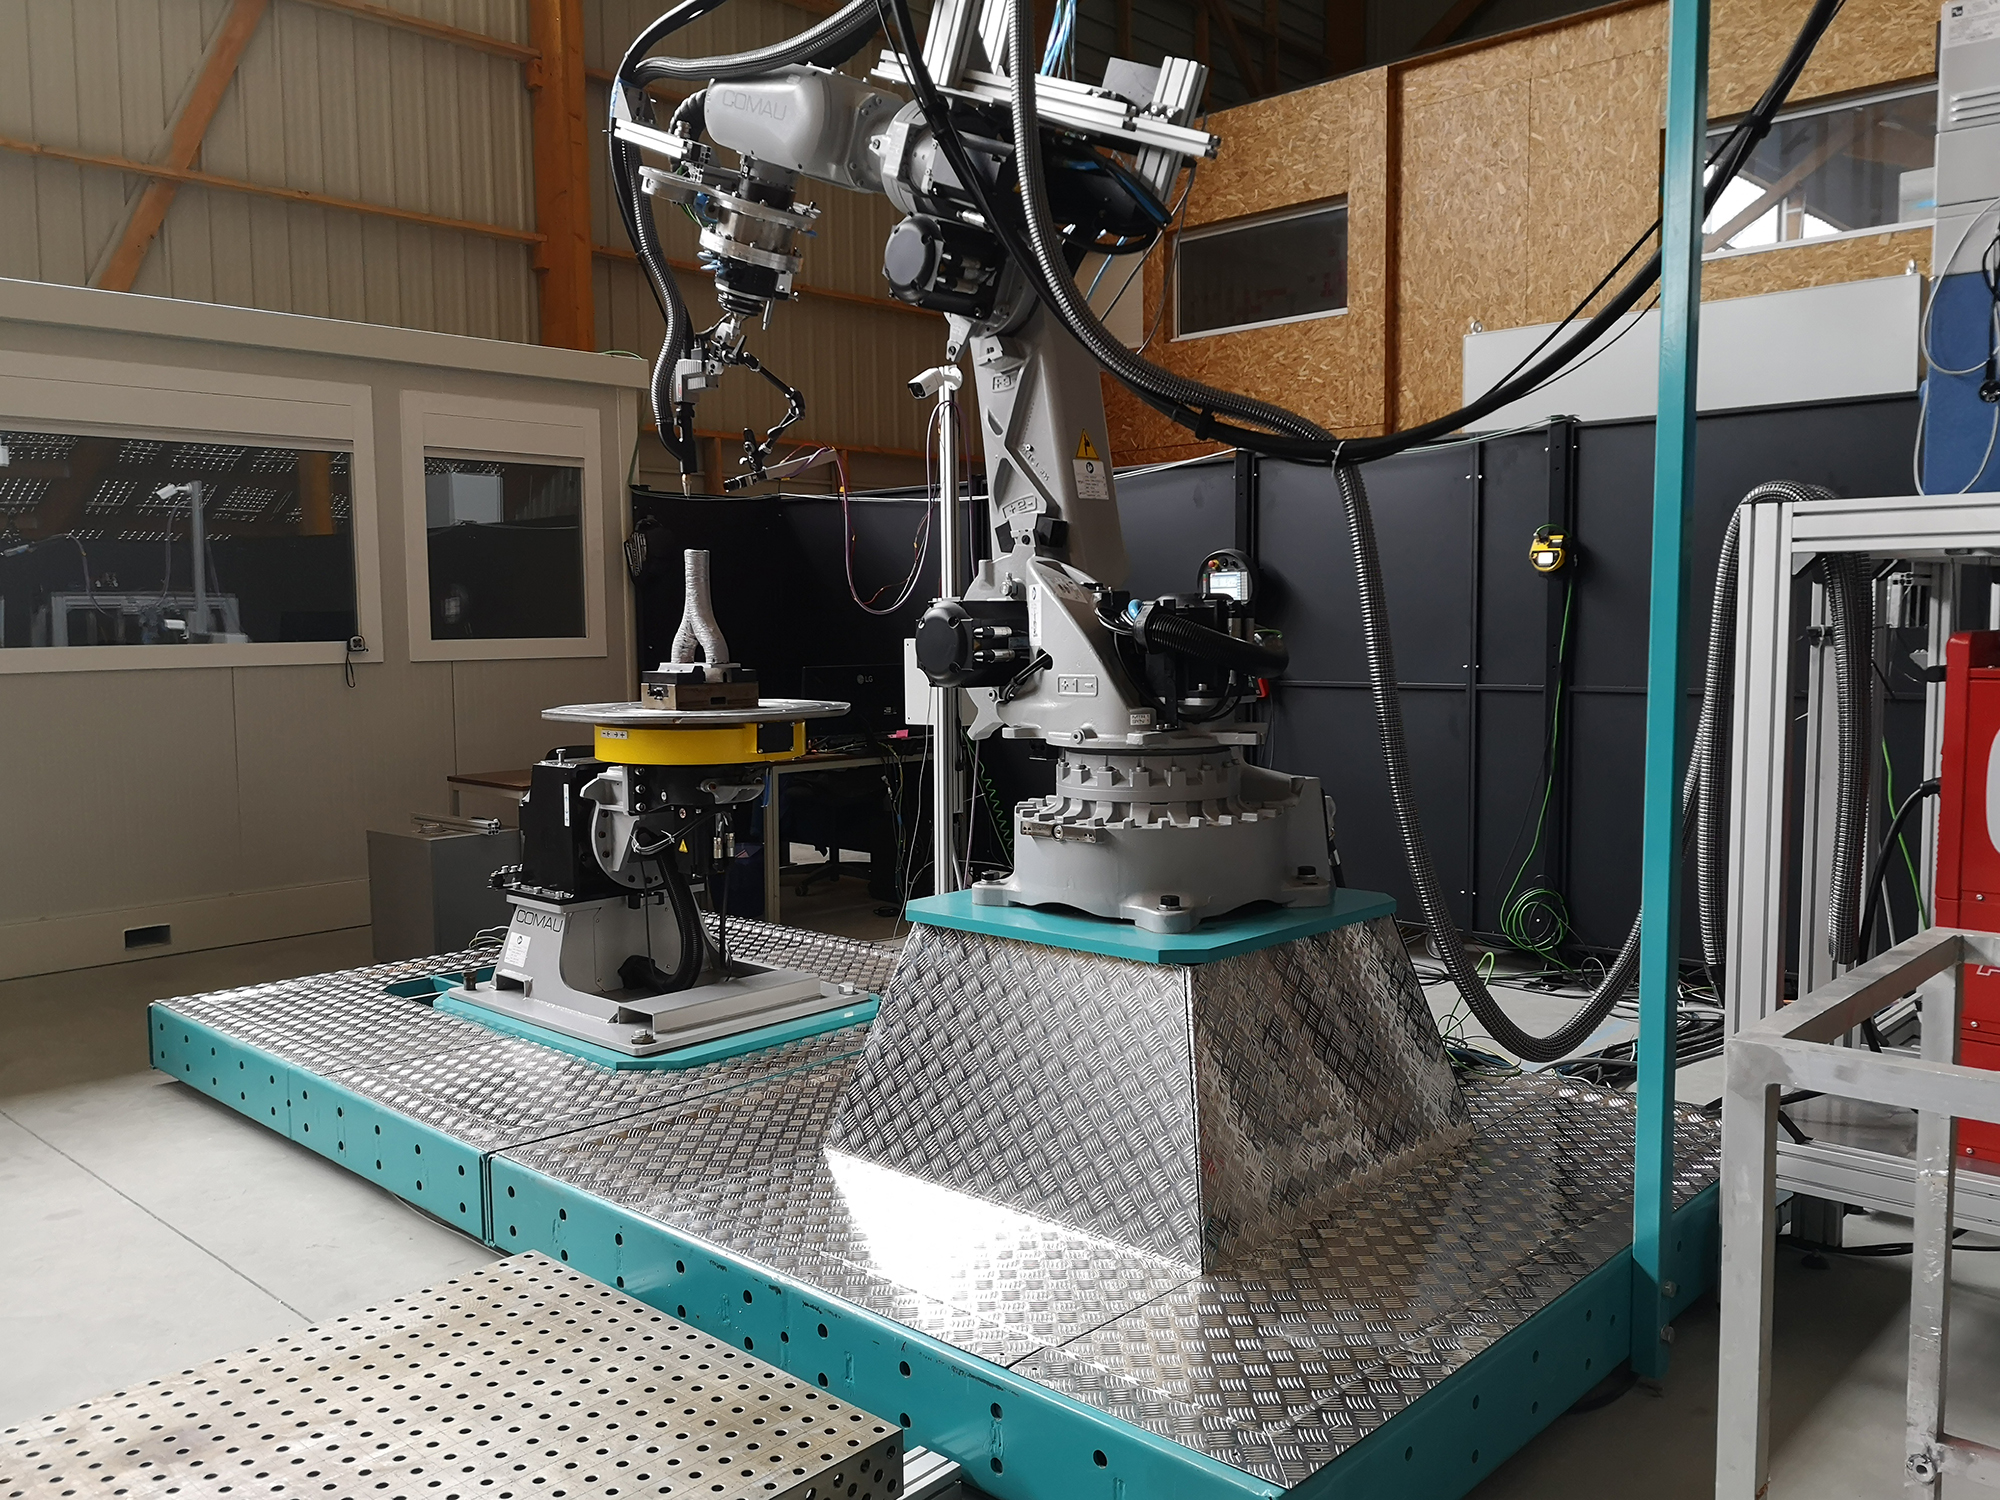 technologie de fabrication additive robotisée intelligente